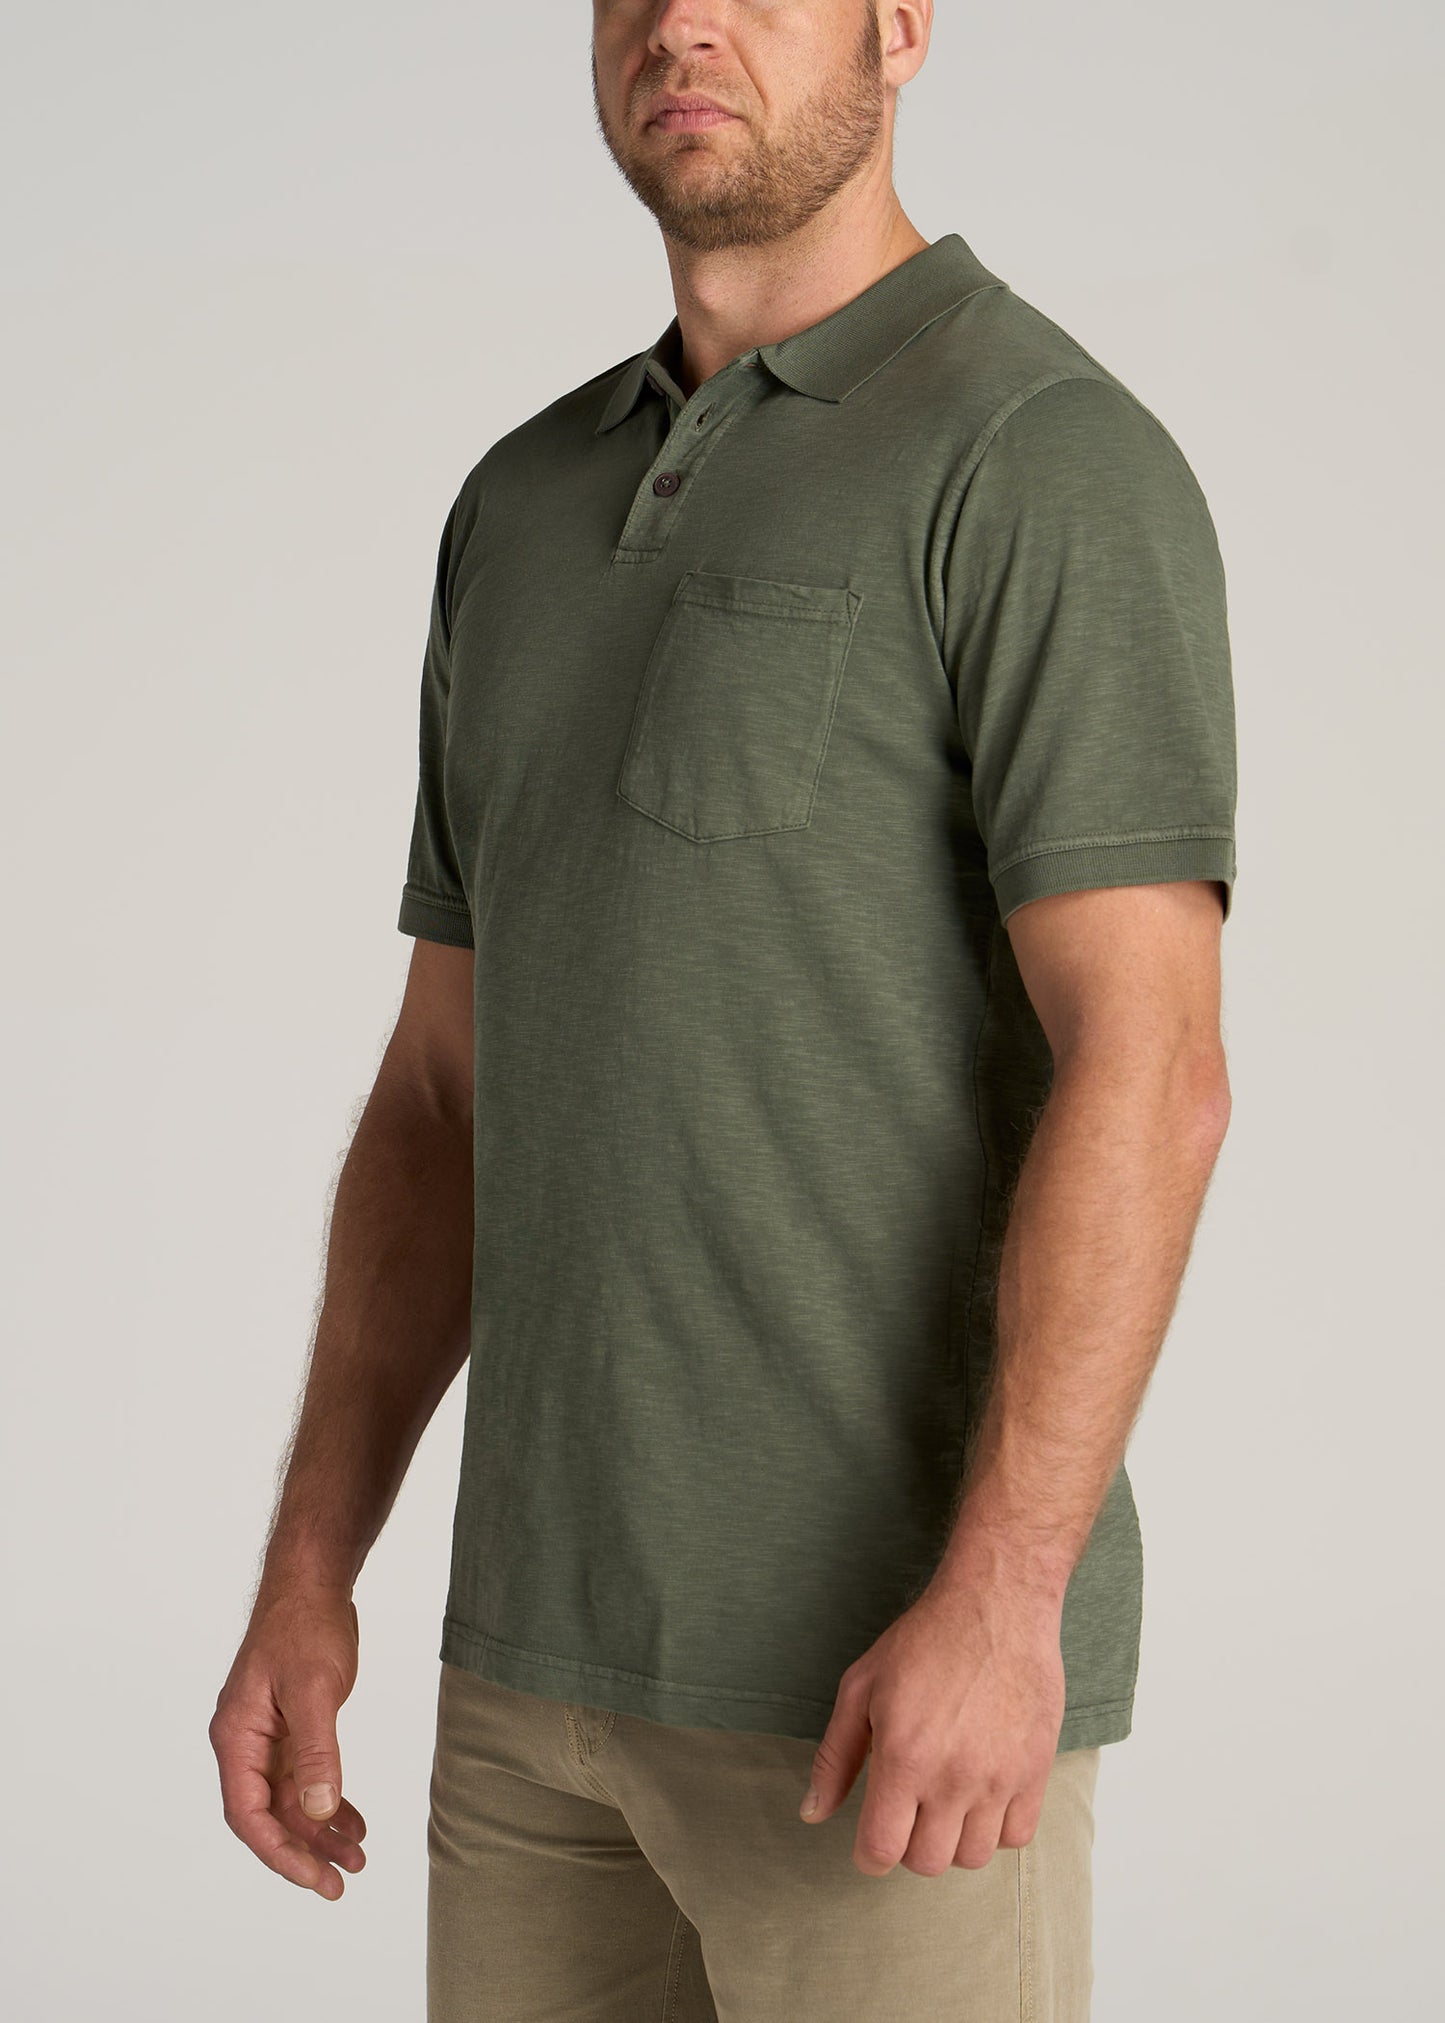     American-Tall-Men-LJ-Slub-Pocket-Polo-Shirt-Vintage-Canoe-Green-side